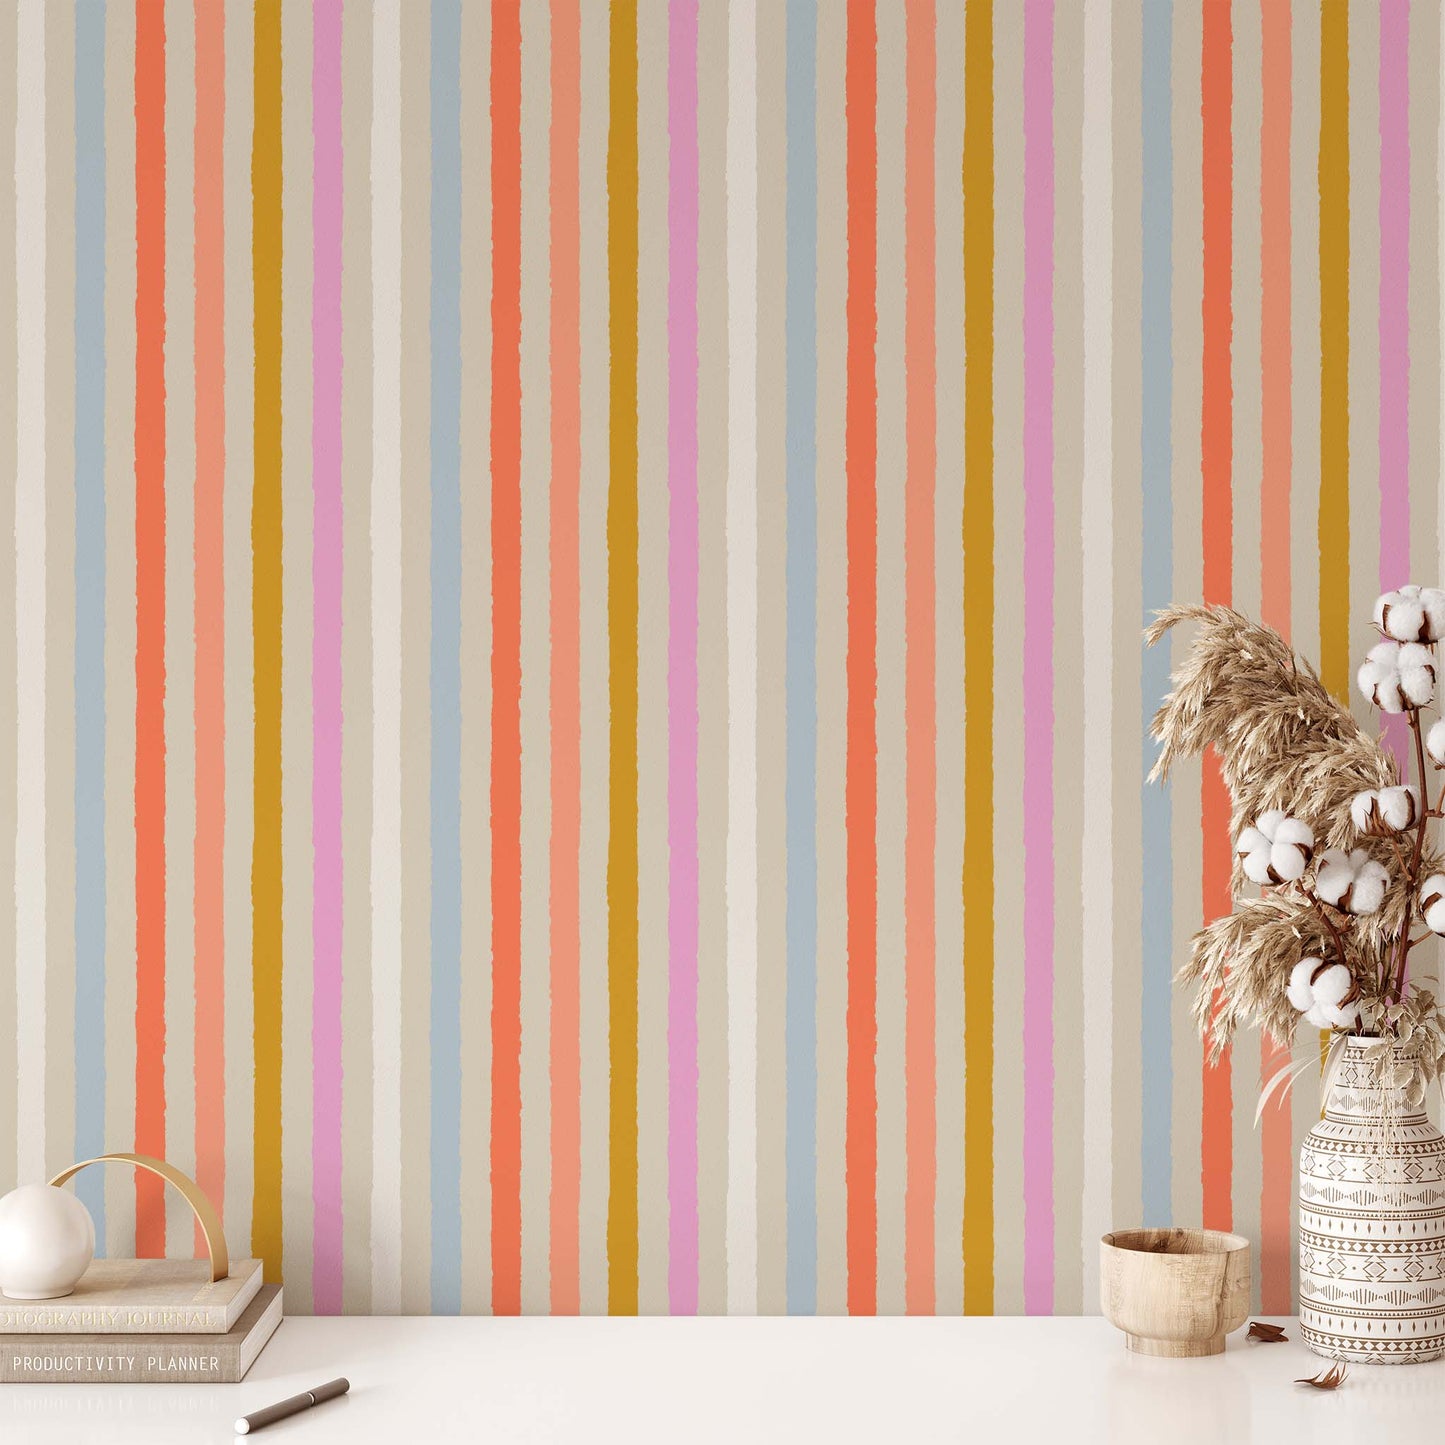 Wallpaper panel featuring Iris + Sea Bold Stripe- Multi - a striped pattern